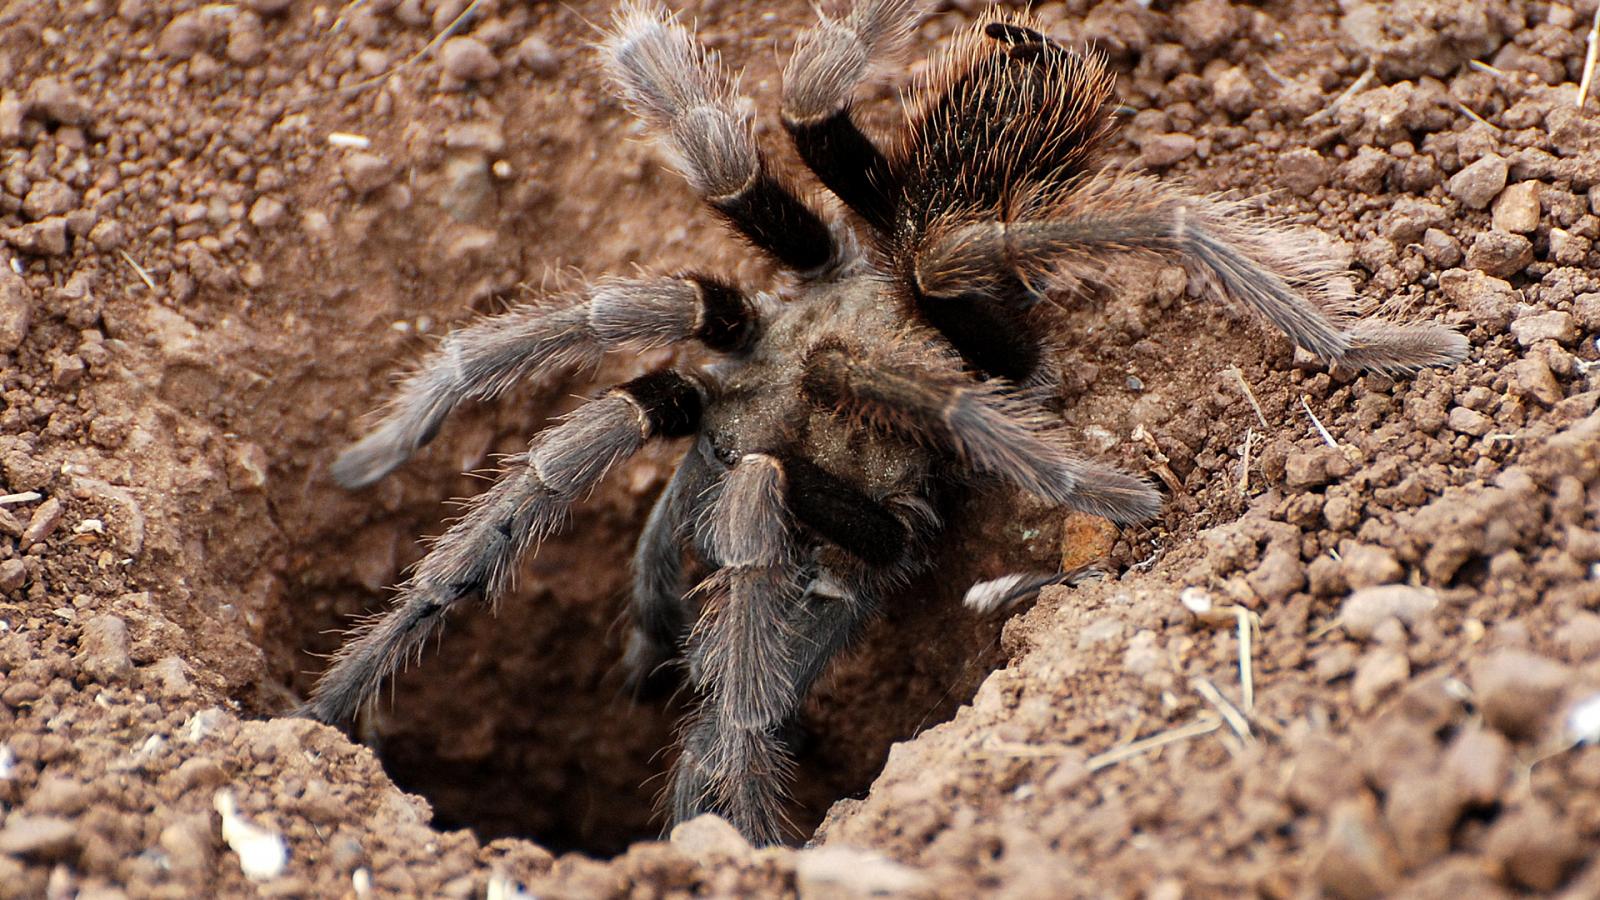 tarantula crawling into a hole in the ground